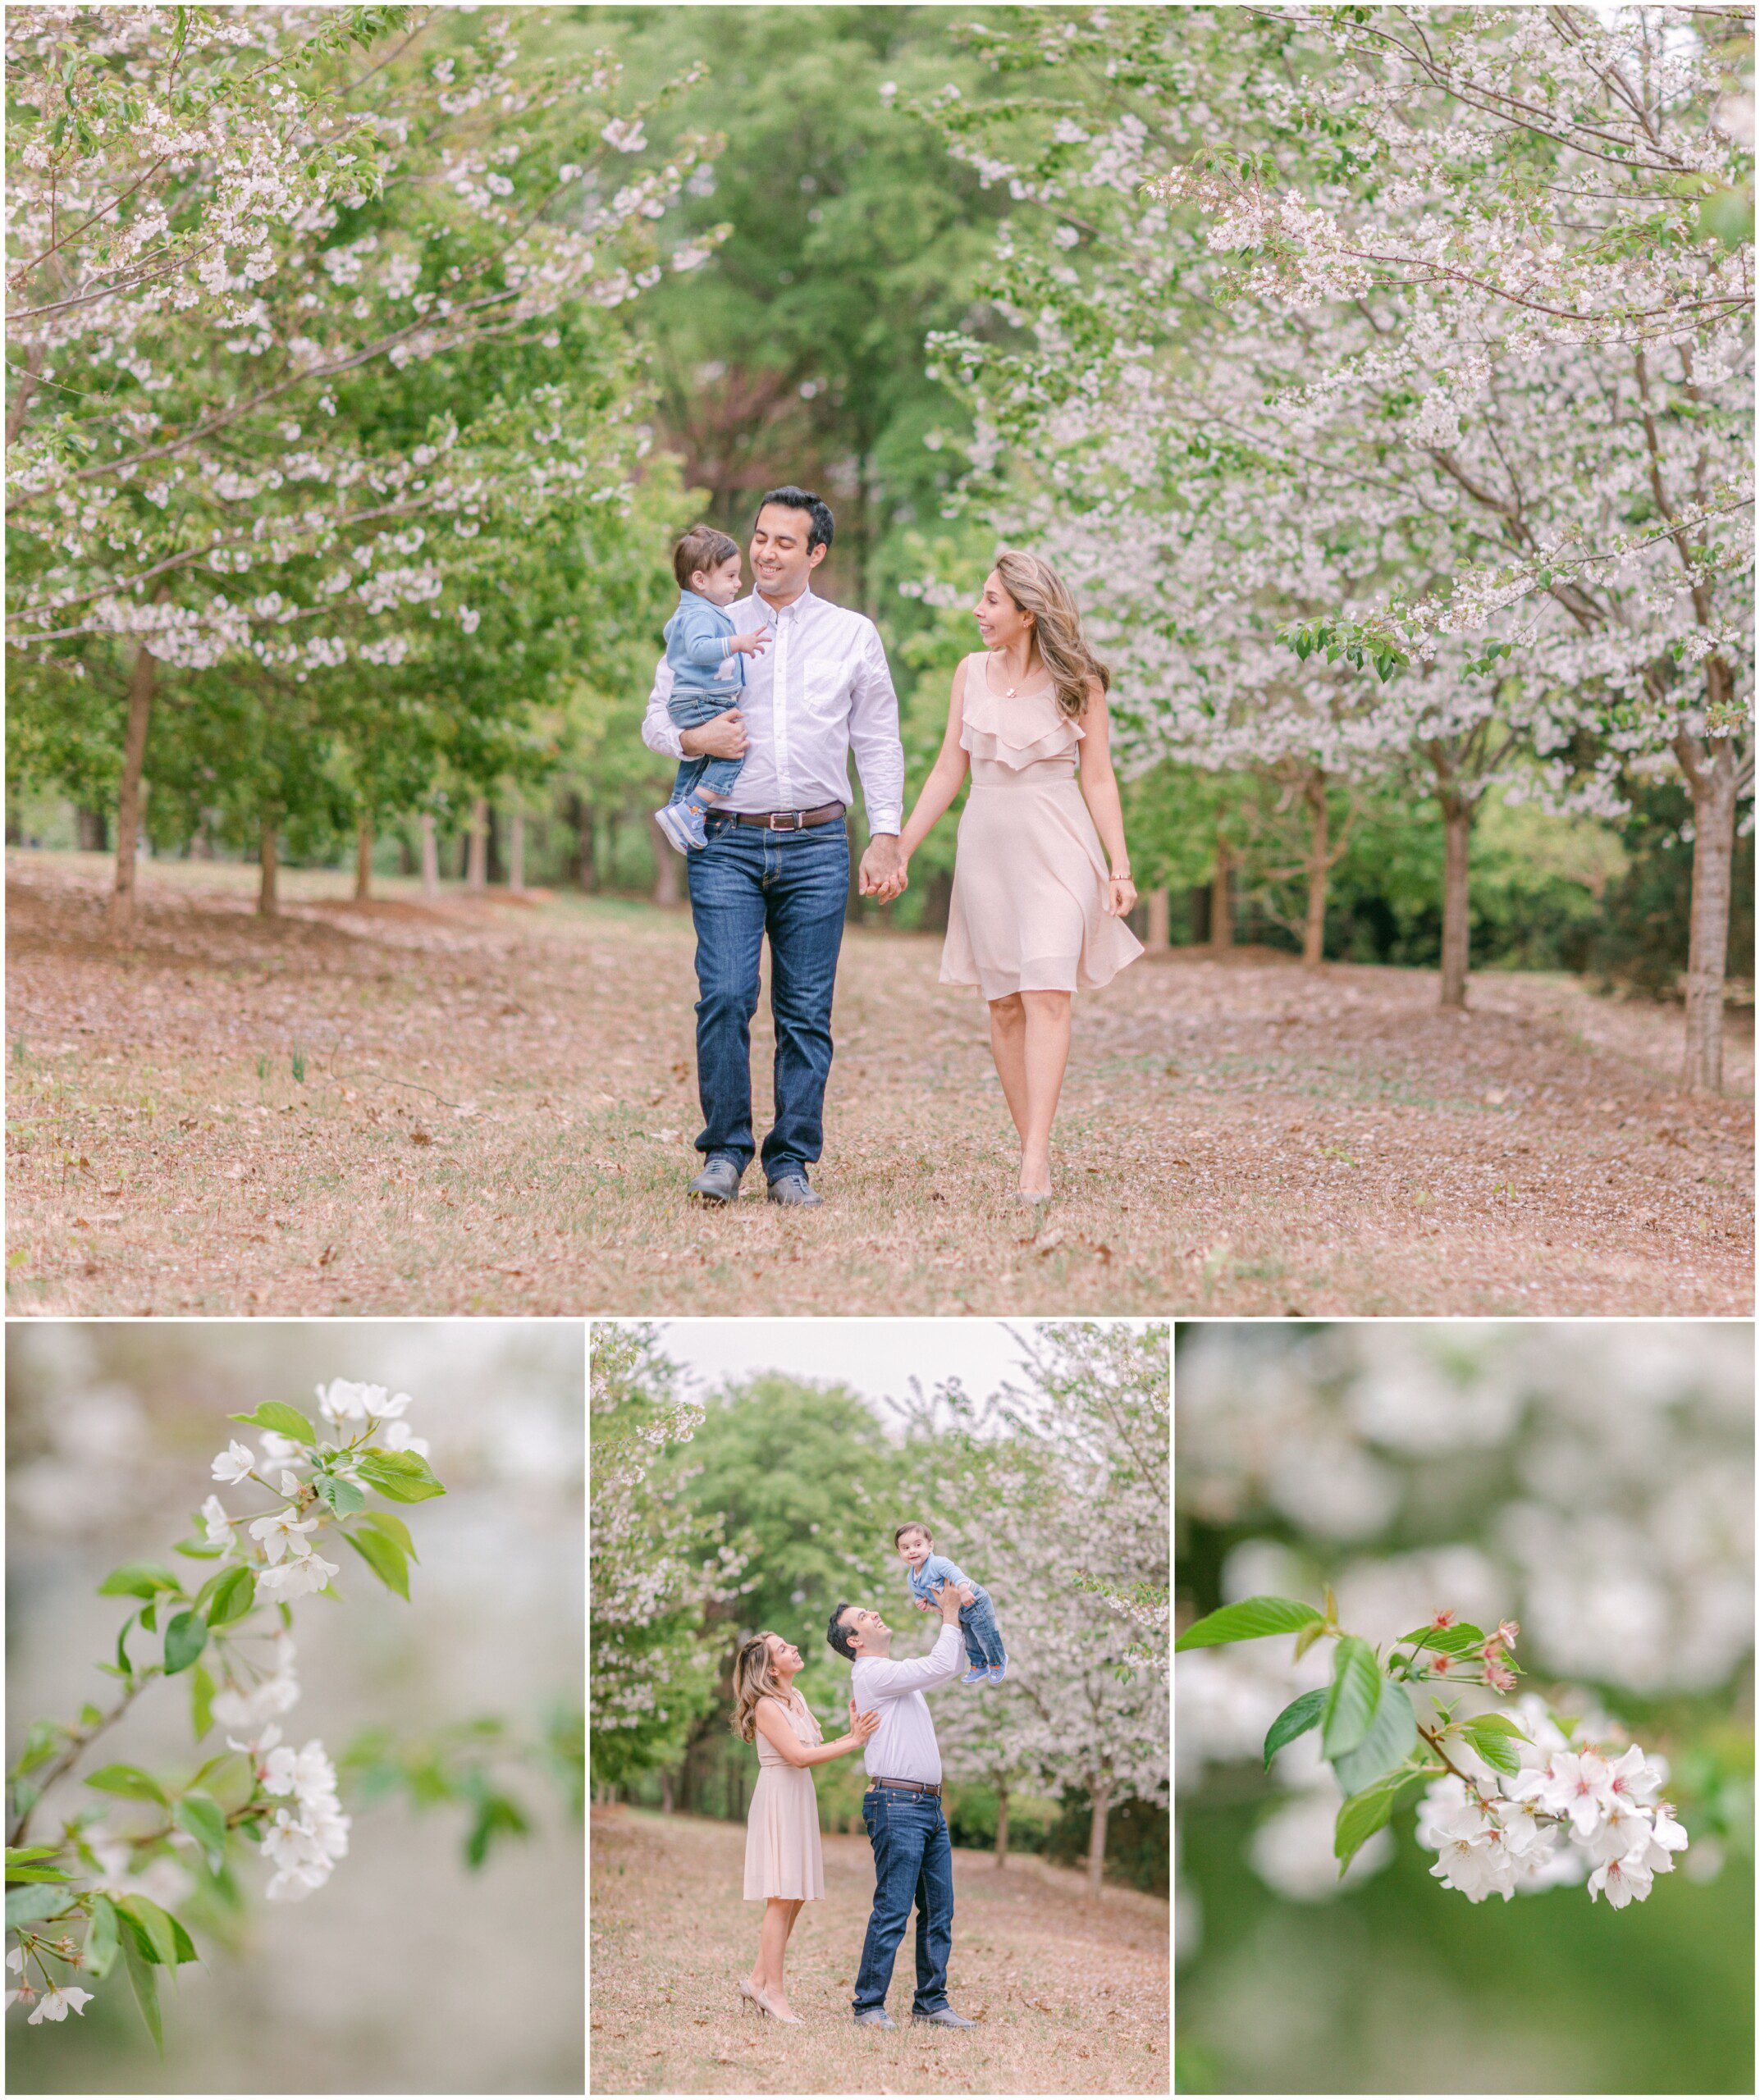 Beautiful family Cherry blossom portraits Athens, GA